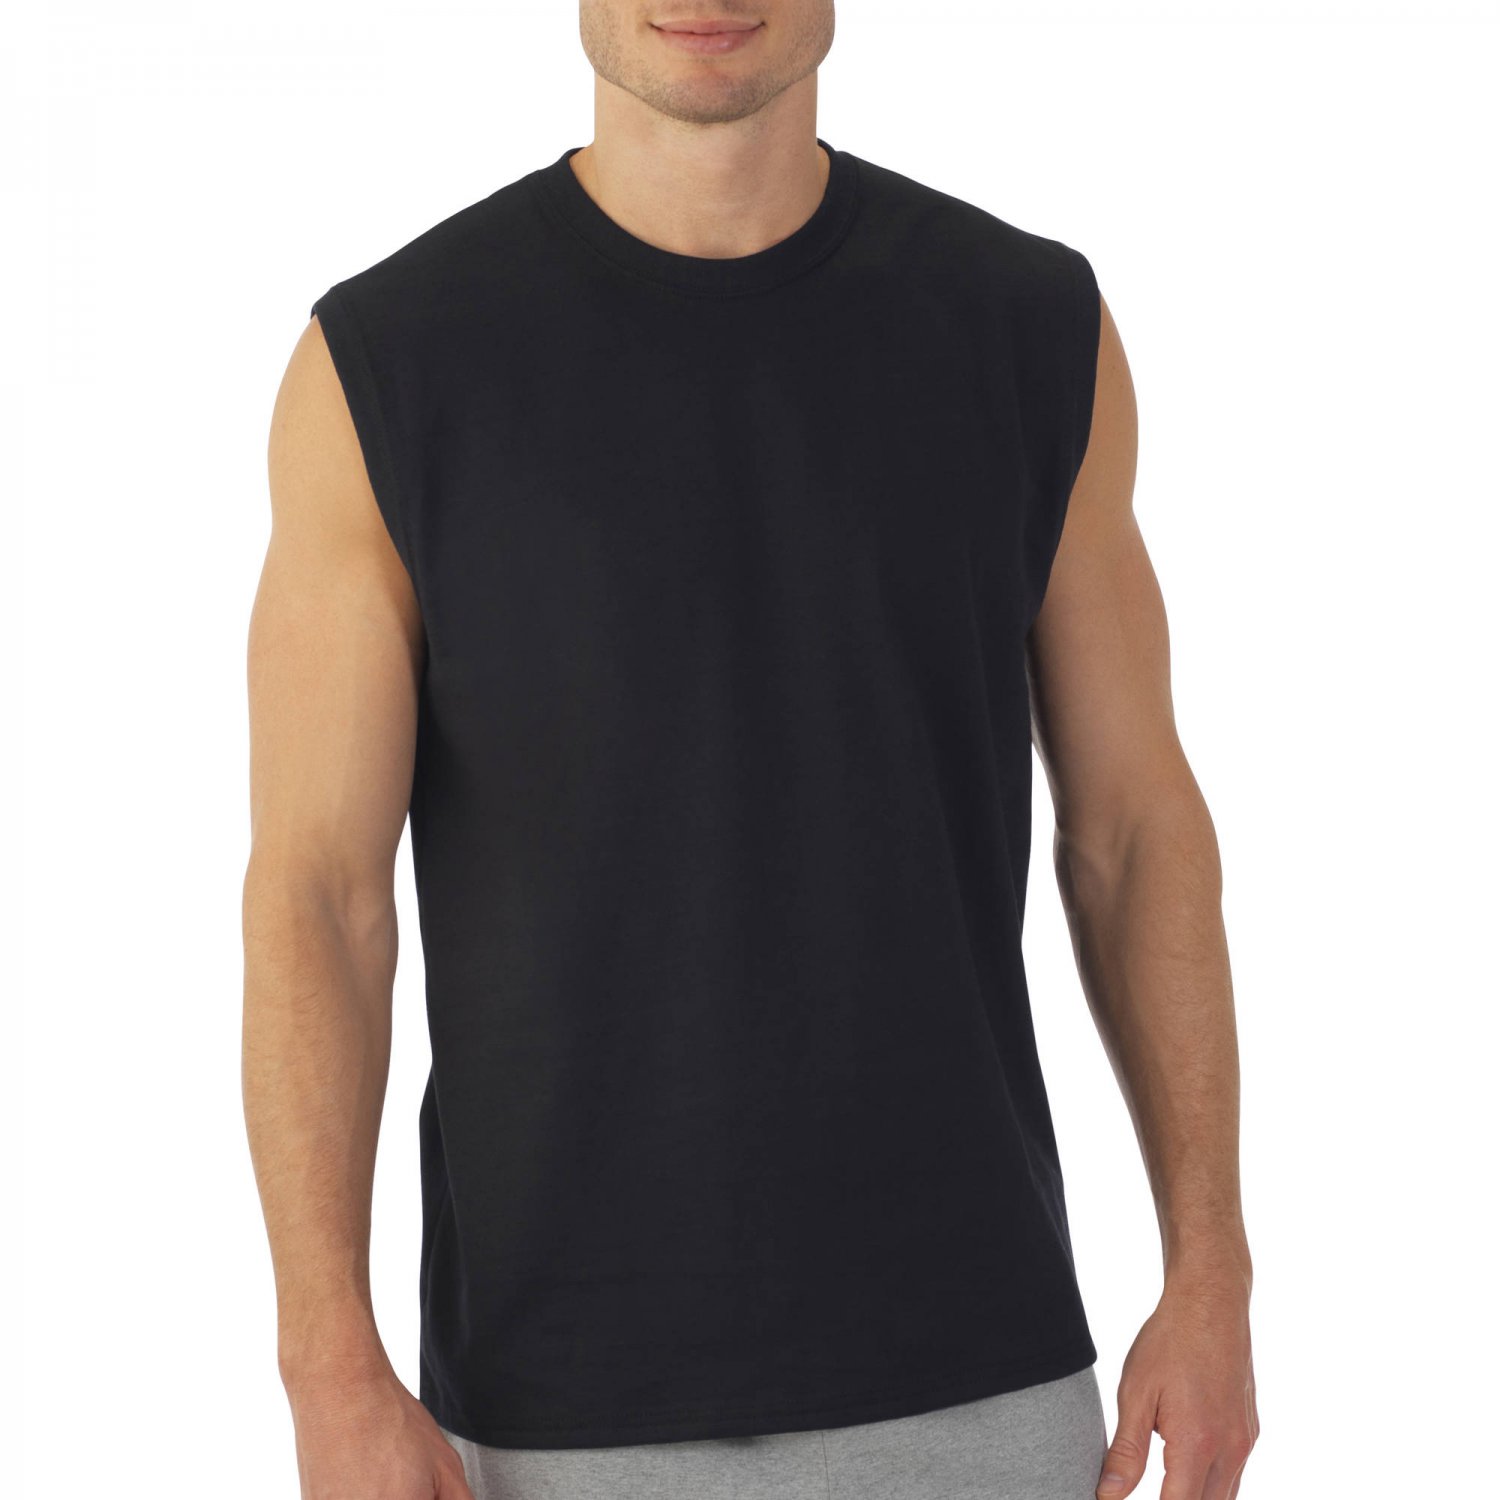 Dri-Fit Shirt for Women High Quality Tops Basics GYM Plus Size for Men COD  Running Unisex Plain